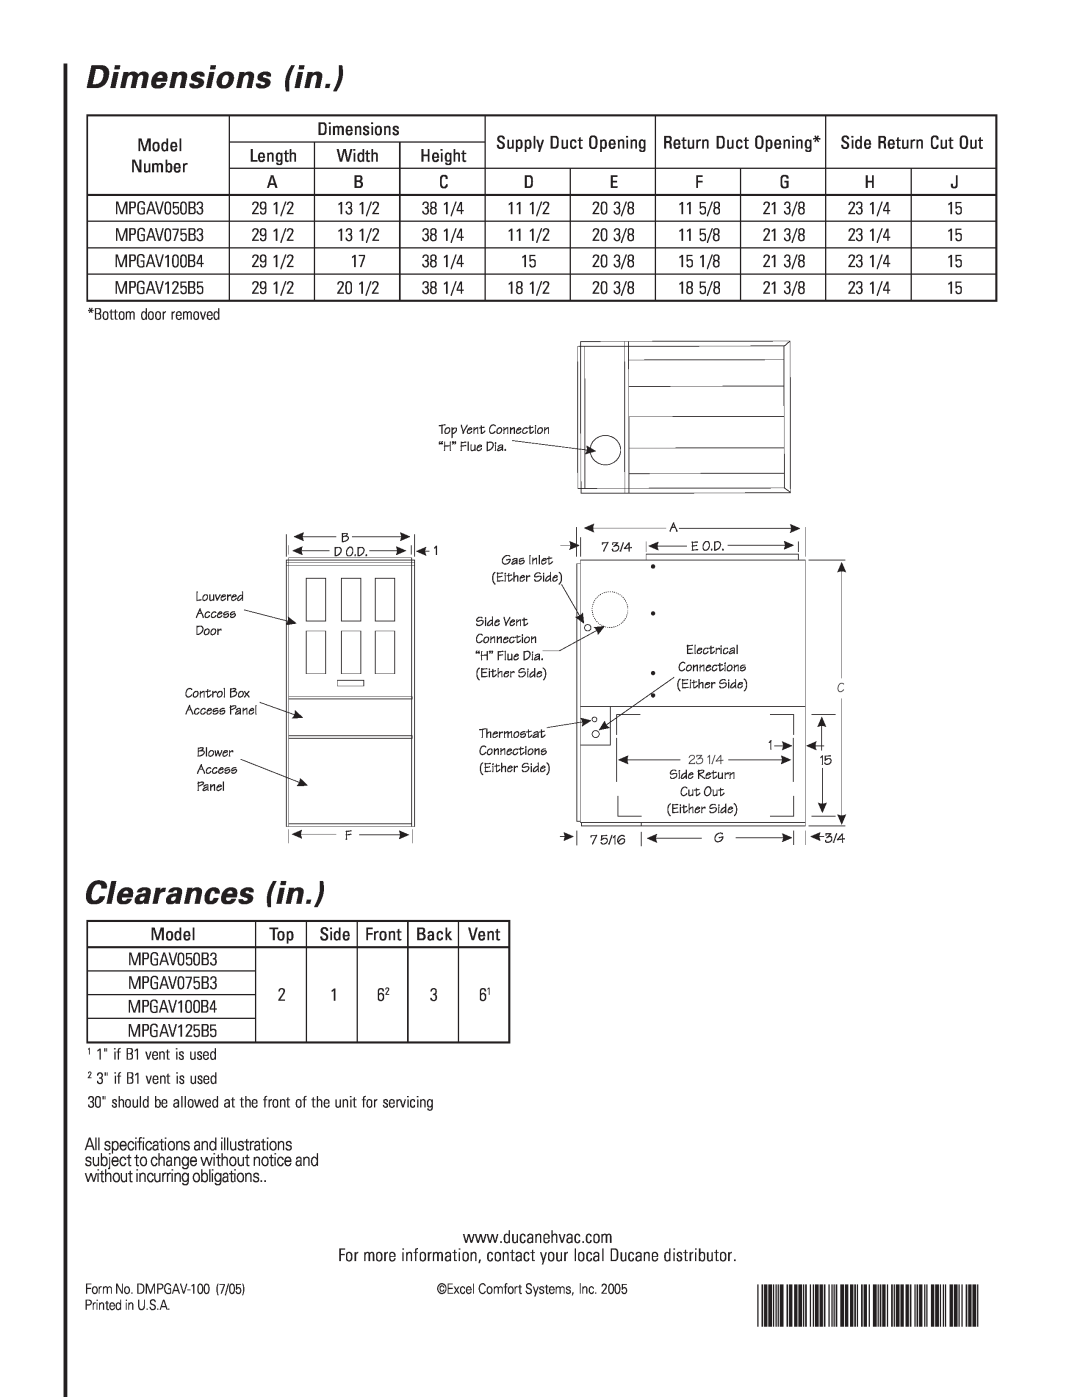 Ducane (HVAC) FITS-ALL 80V warranty Dimensions in, Clearances in, DMPGAV-100 